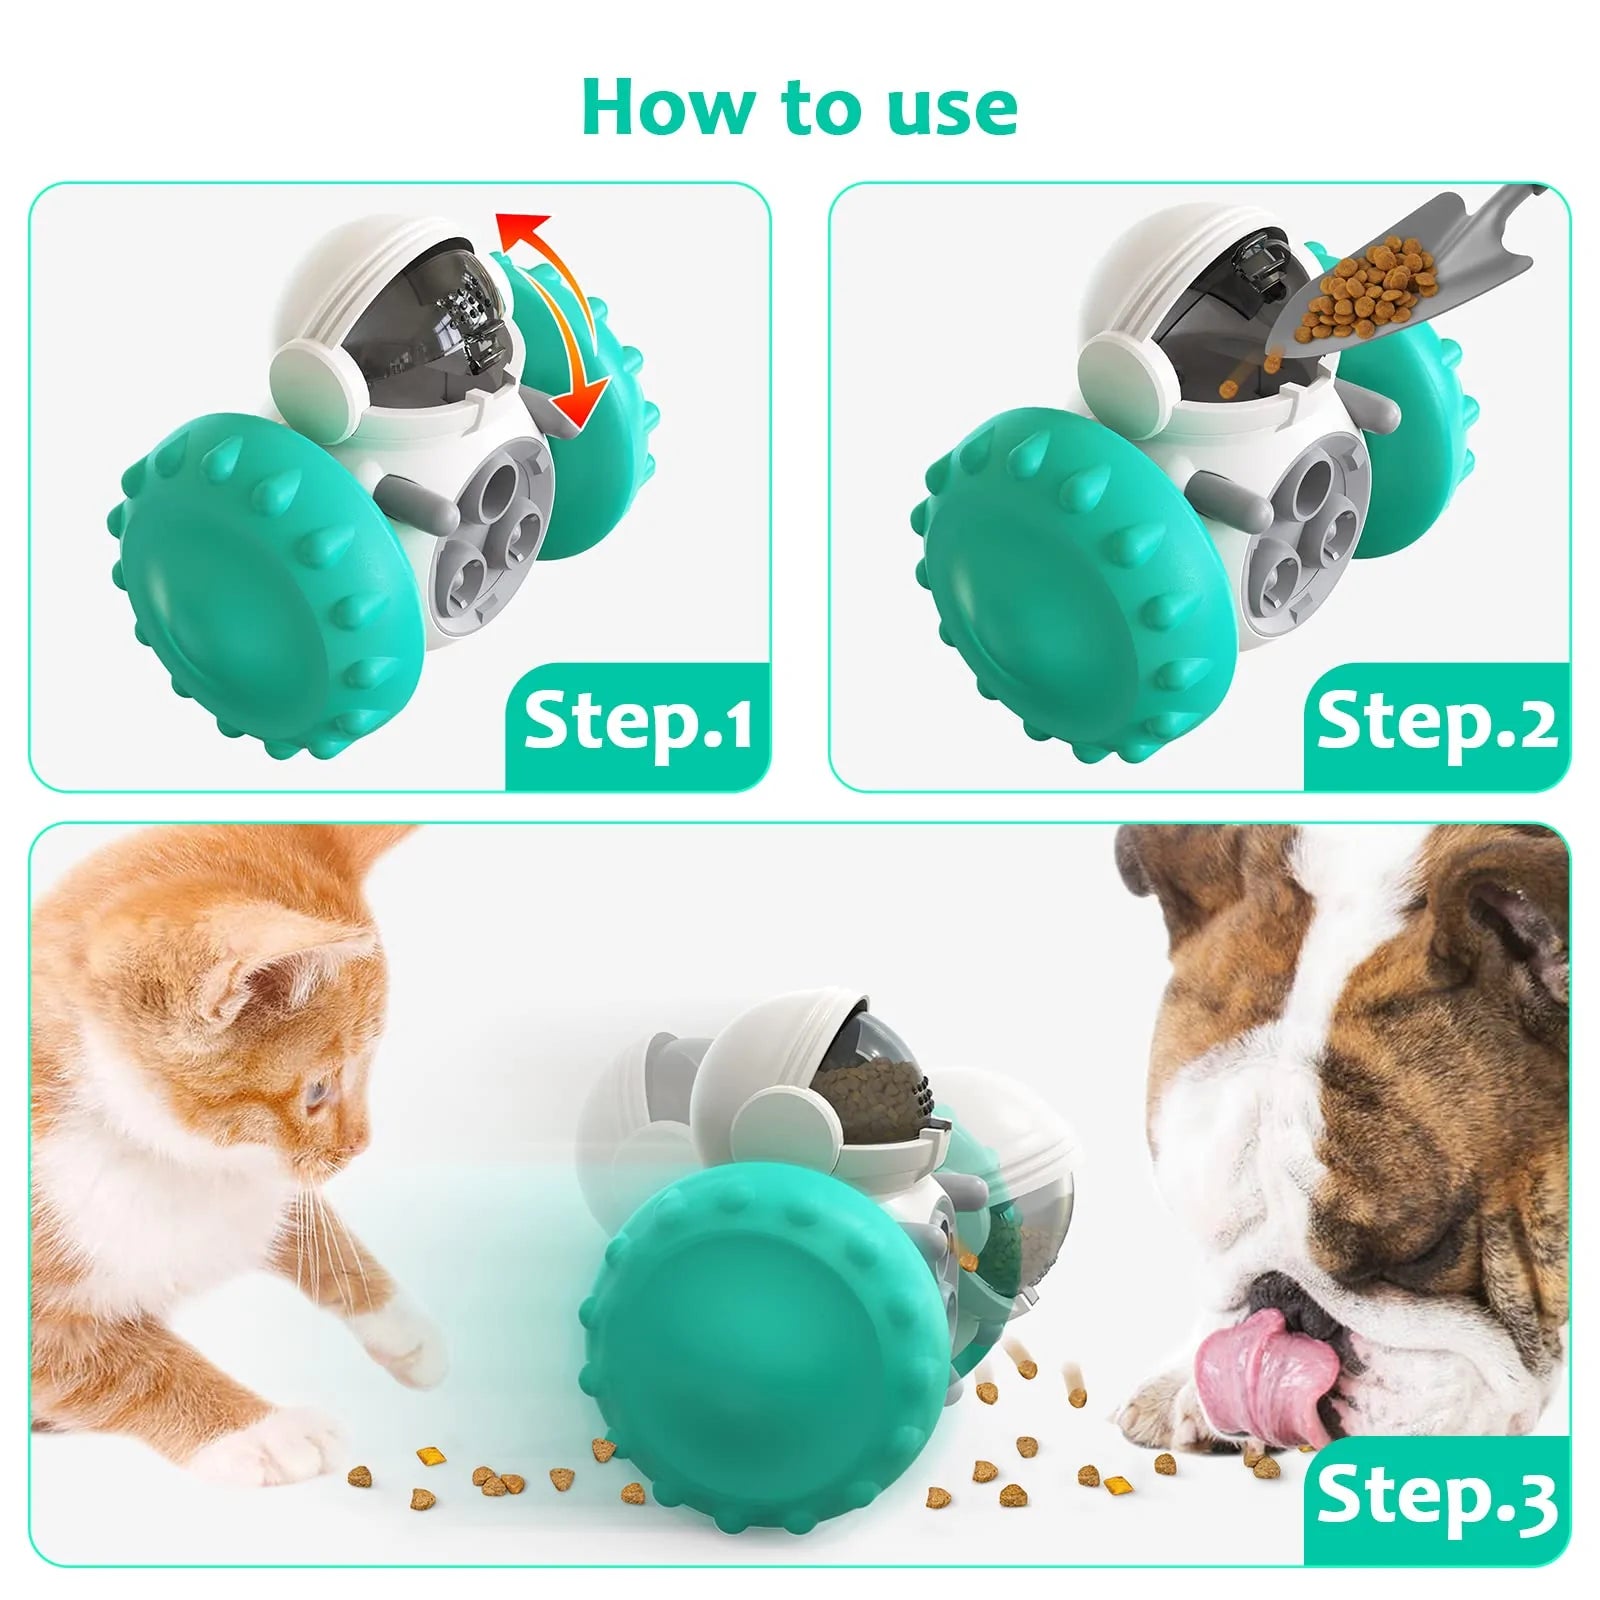 Dog Puzzle Toy, Pet Feeding Bowl For Small Medium Dogs, Feeding